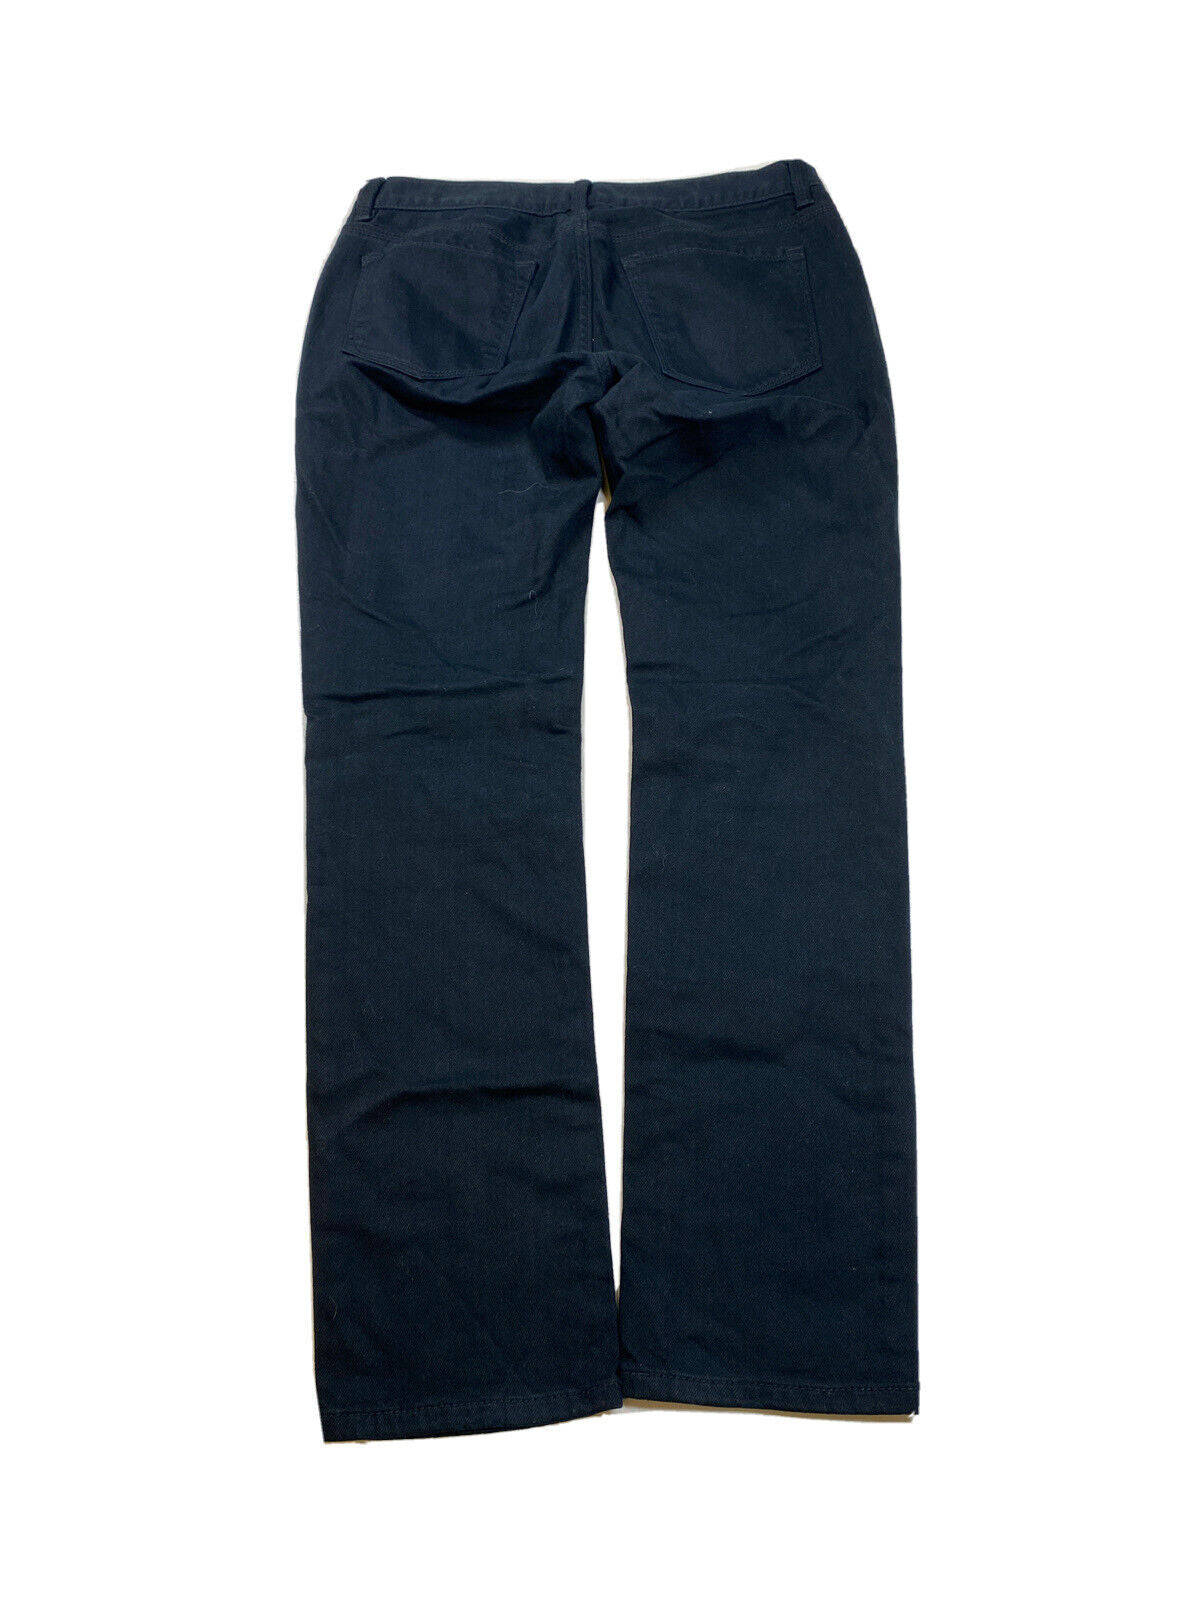 LOFT Women's Black Modern Slim Jeans - 6 Petite